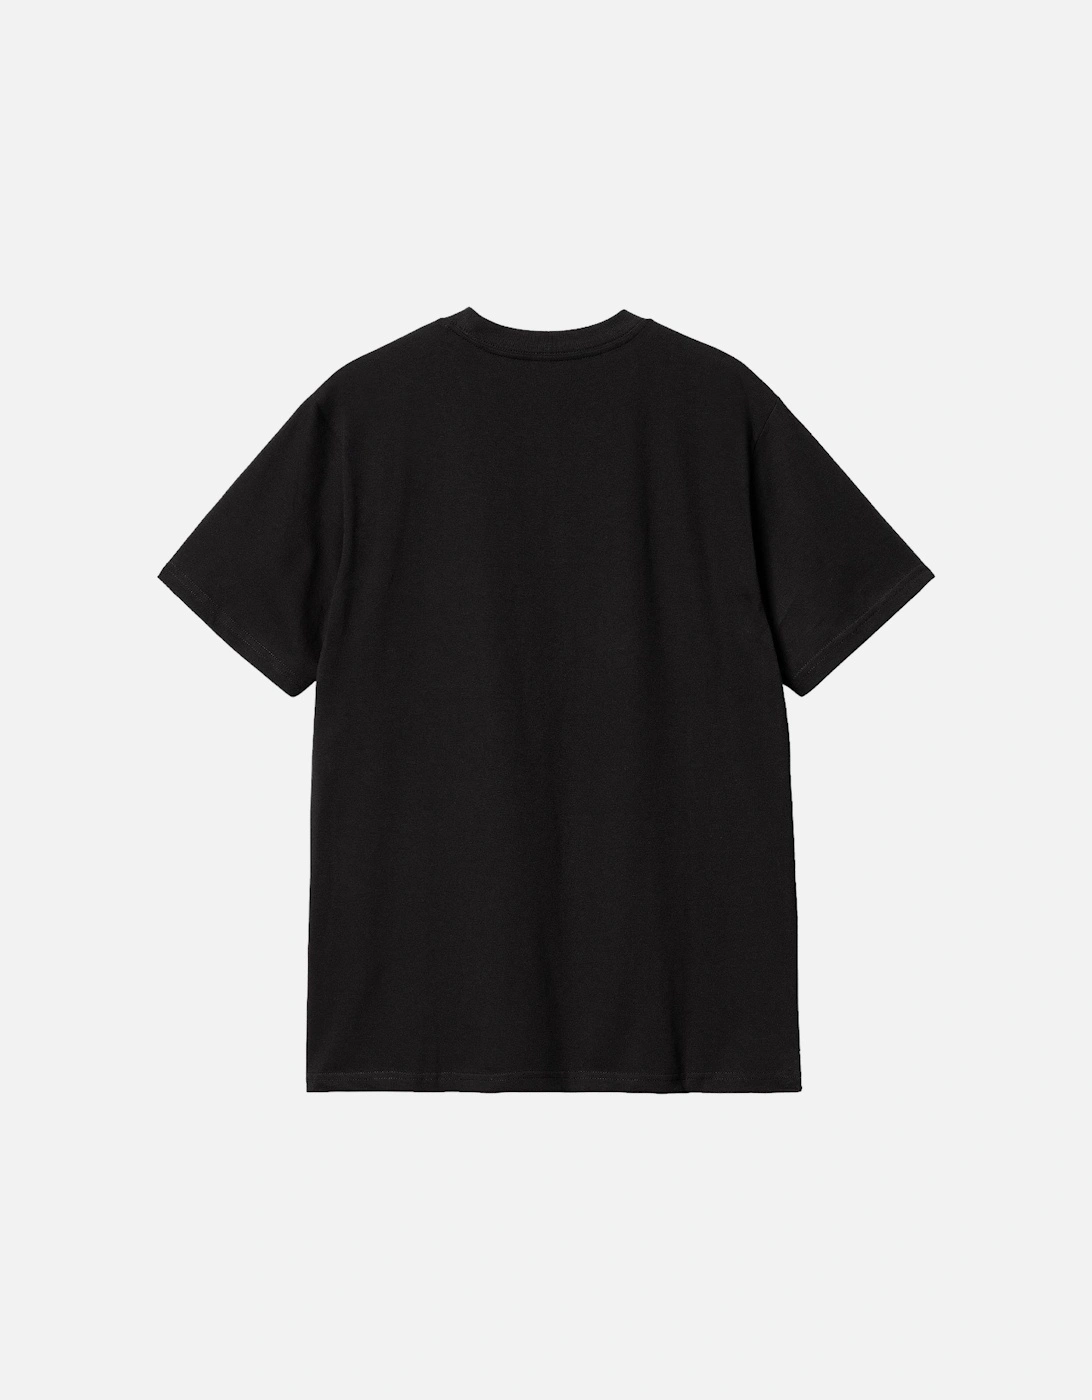 Mystery Machine T-Shirt - Black